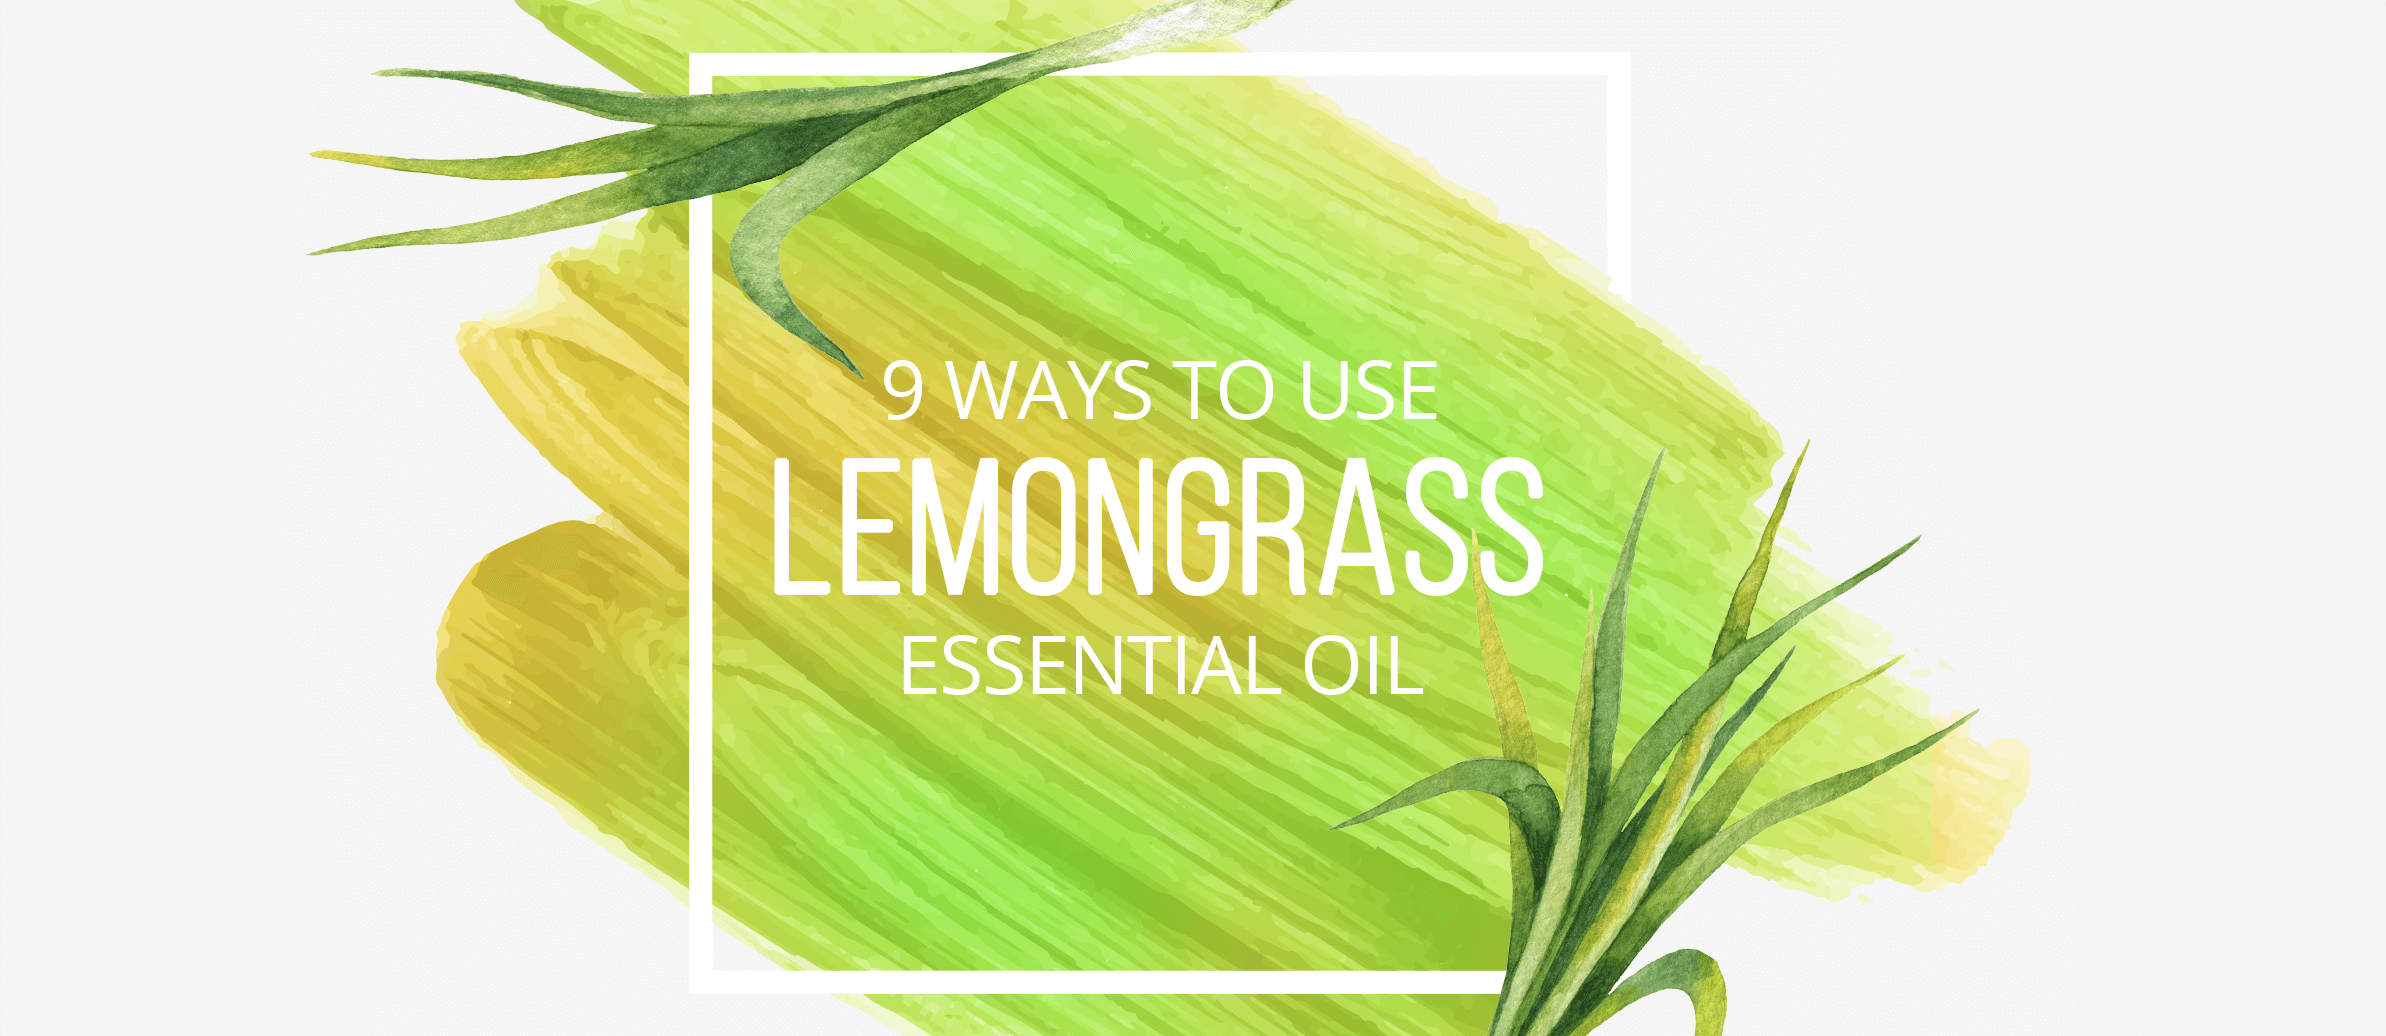 9 Ways to Use Lemongrass Essential Oil